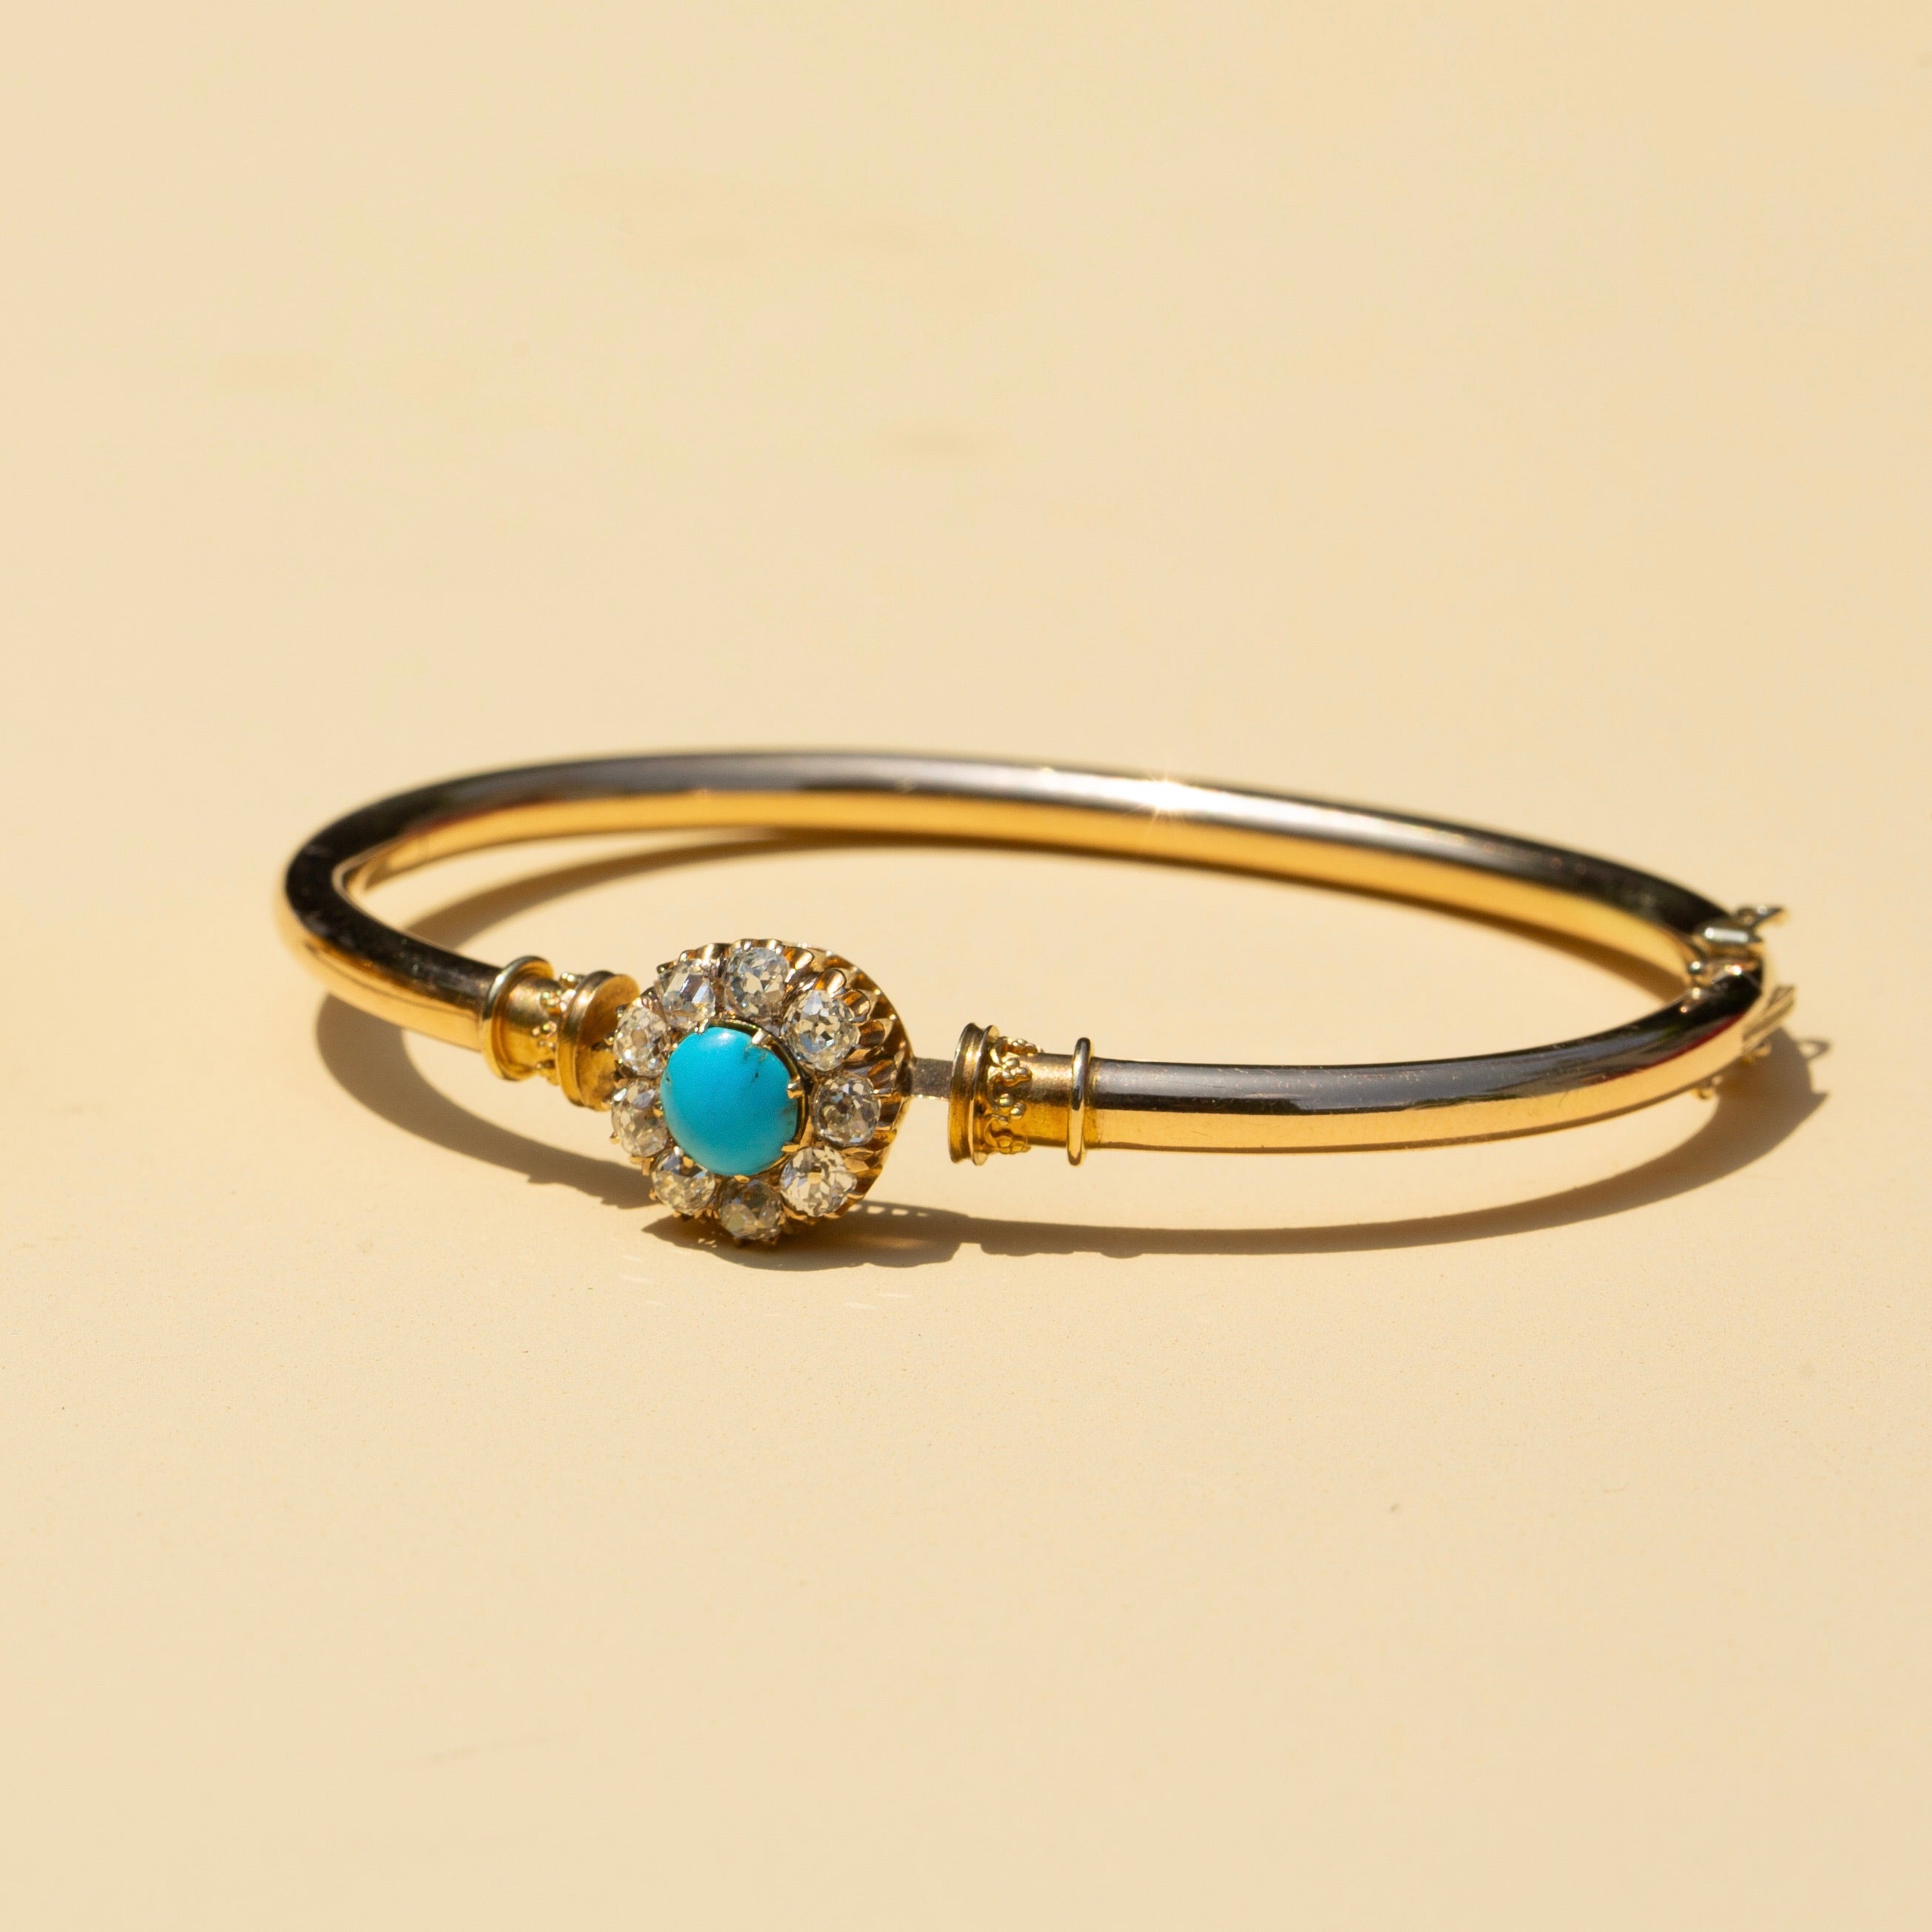 Victorian Turquoise, Diamond, and 14k Gold Bangle Bracelet